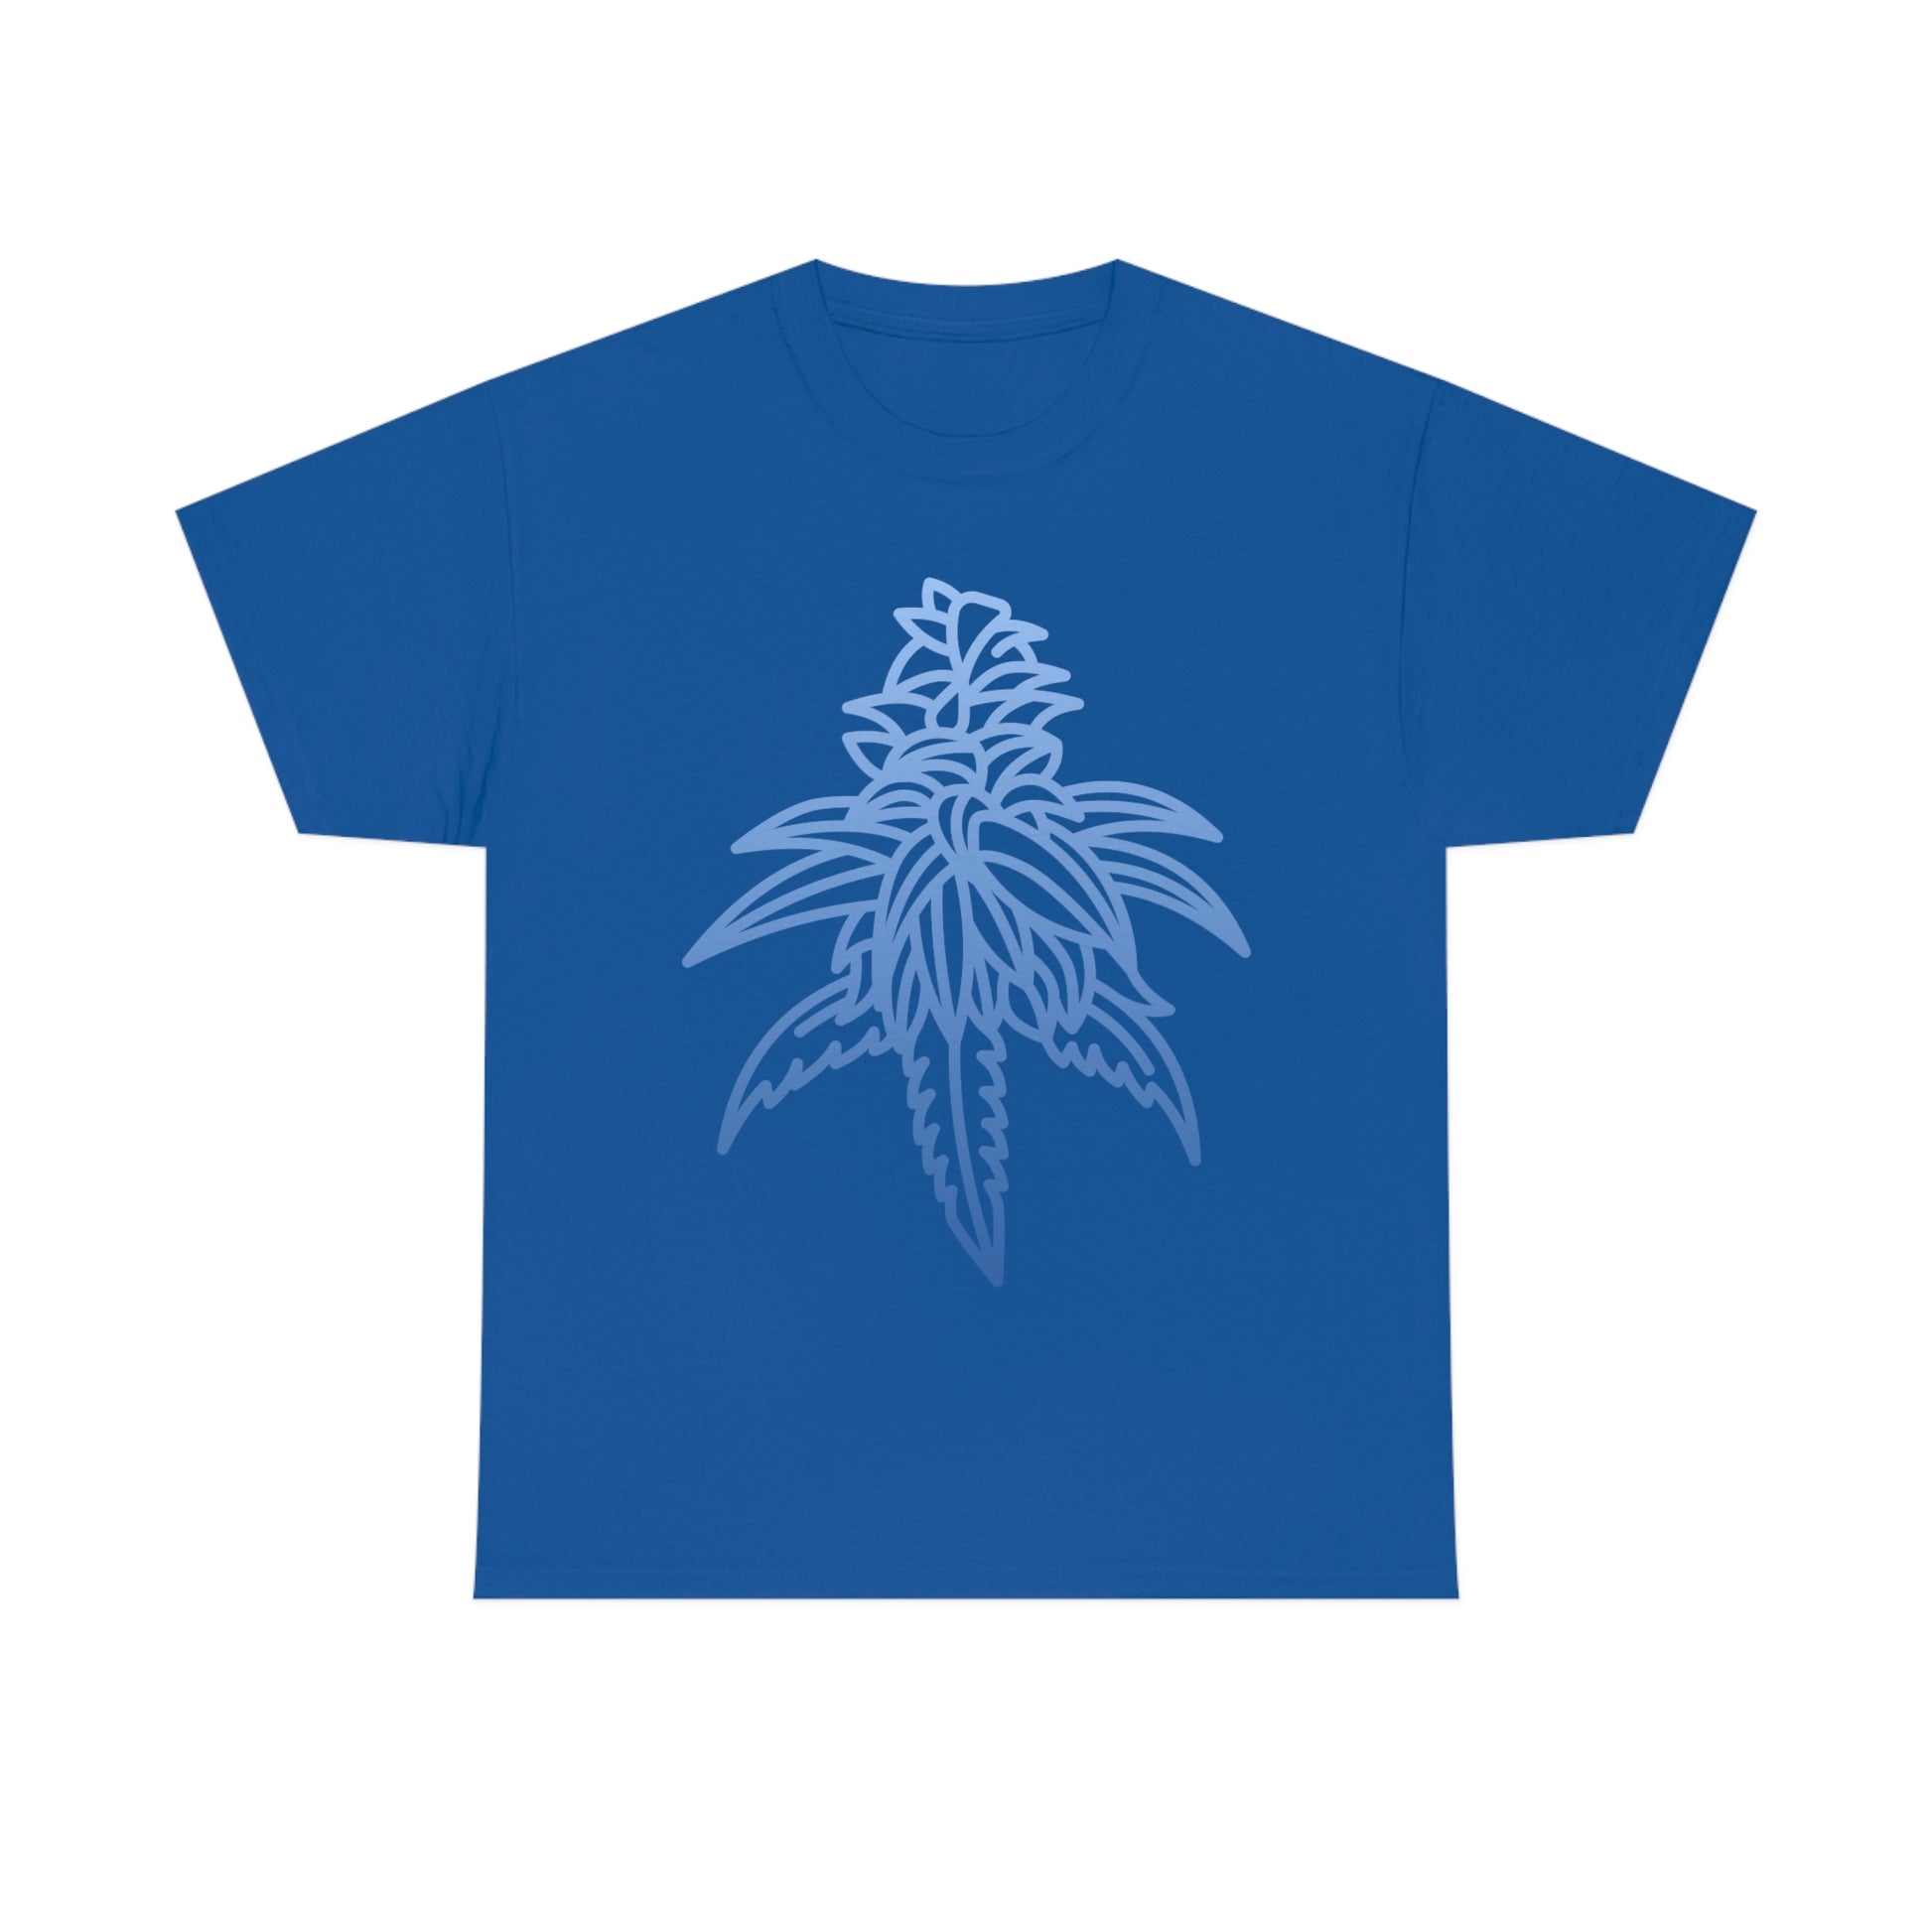 A Blue Dream Cannabis Tee with a leaf on it.